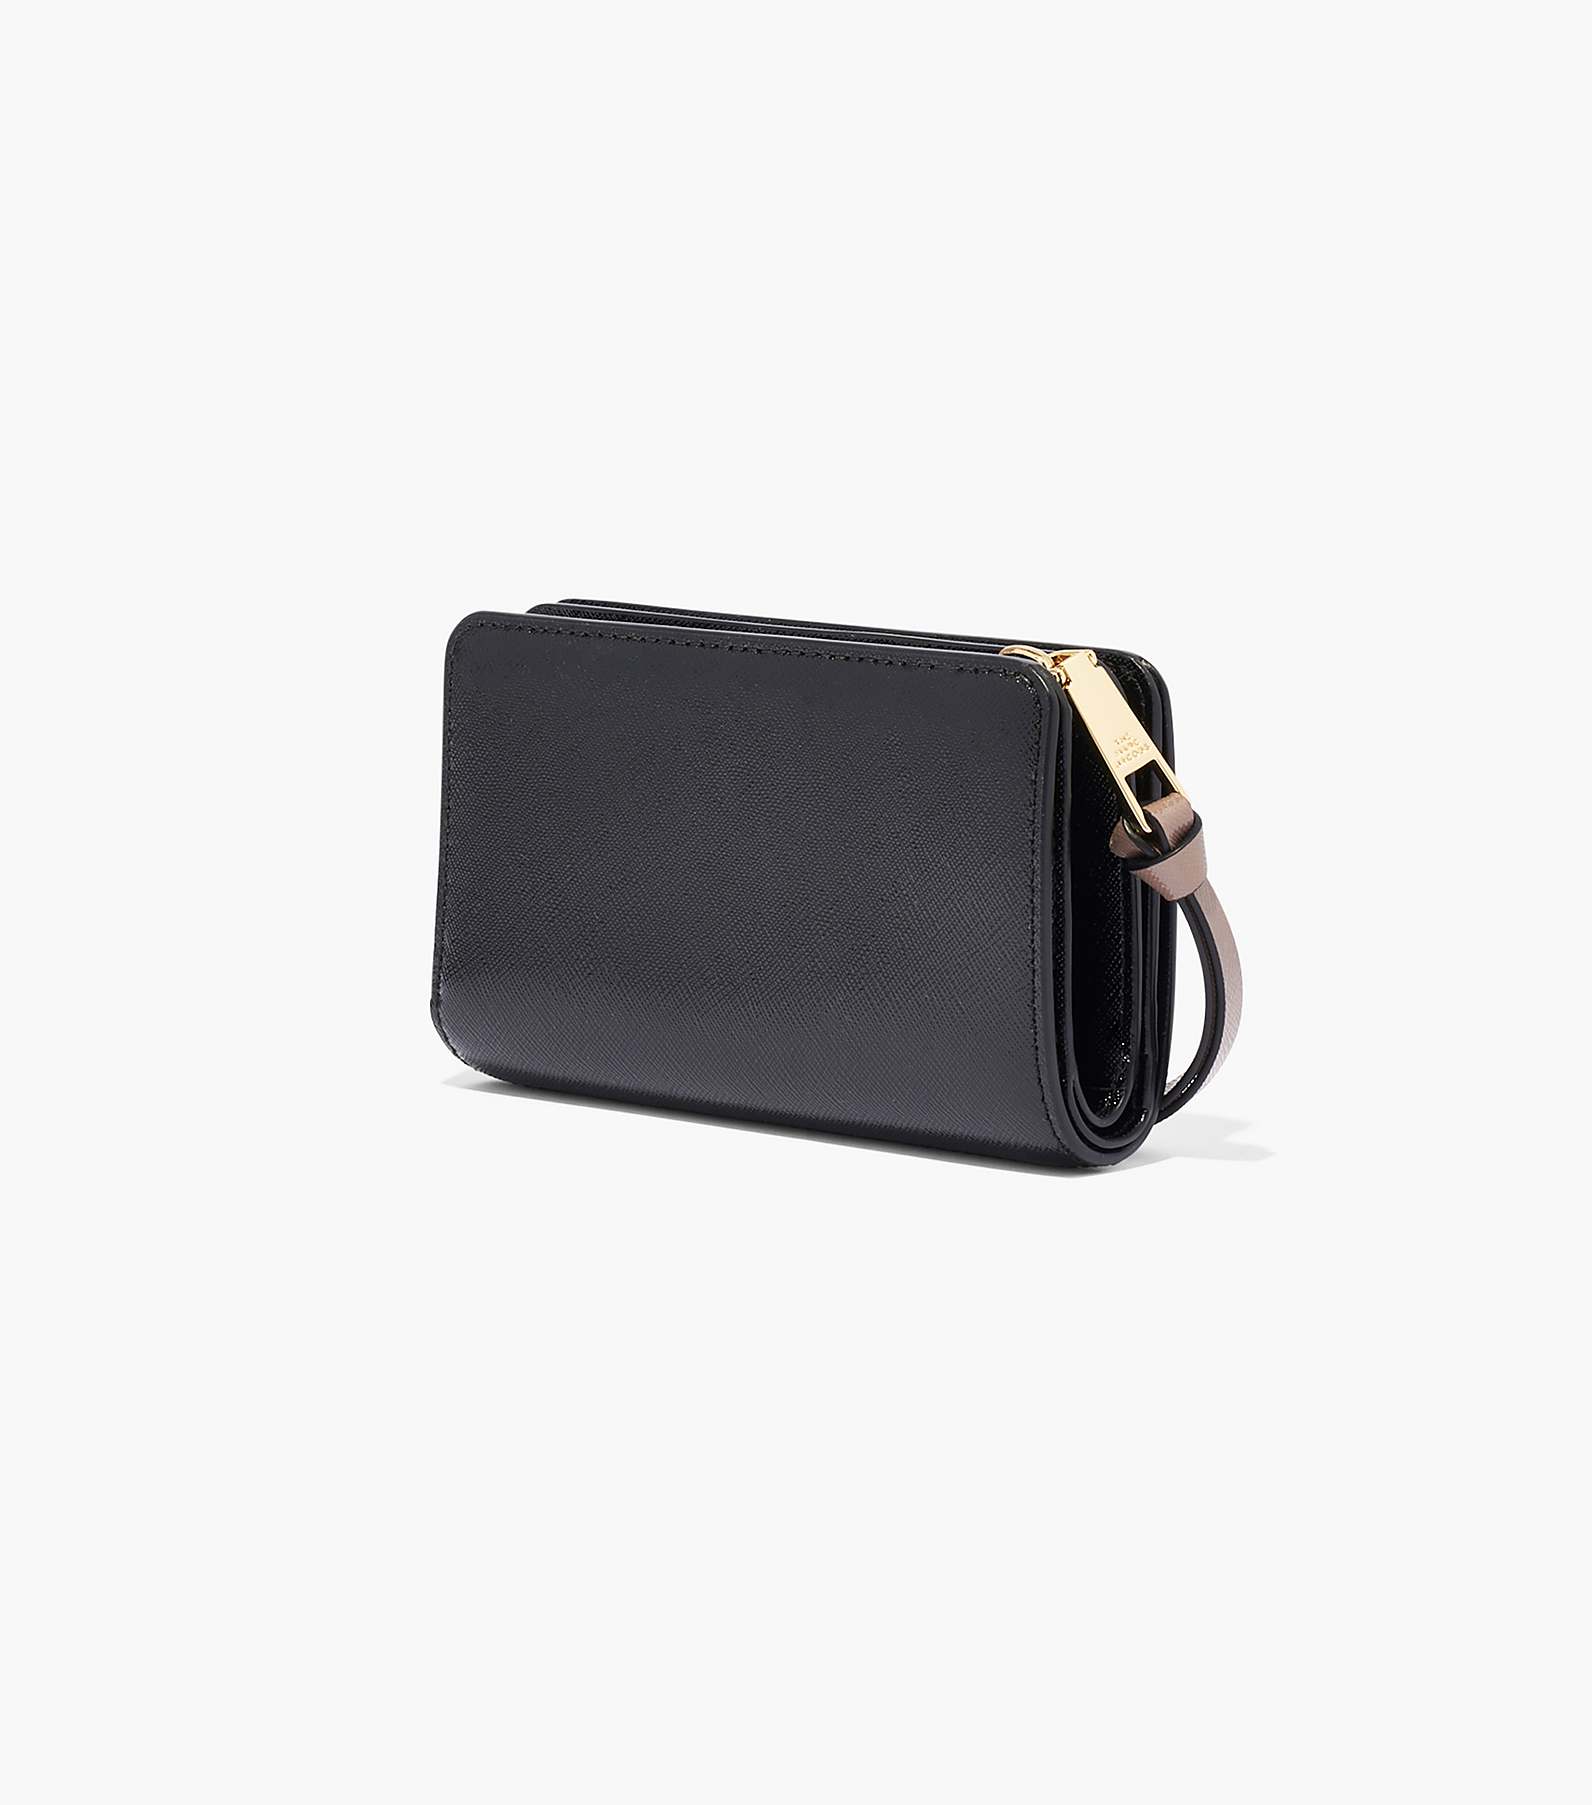 Productief Loodgieter leren The Snapshot Compact Wallet | Marc Jacobs | Official Site